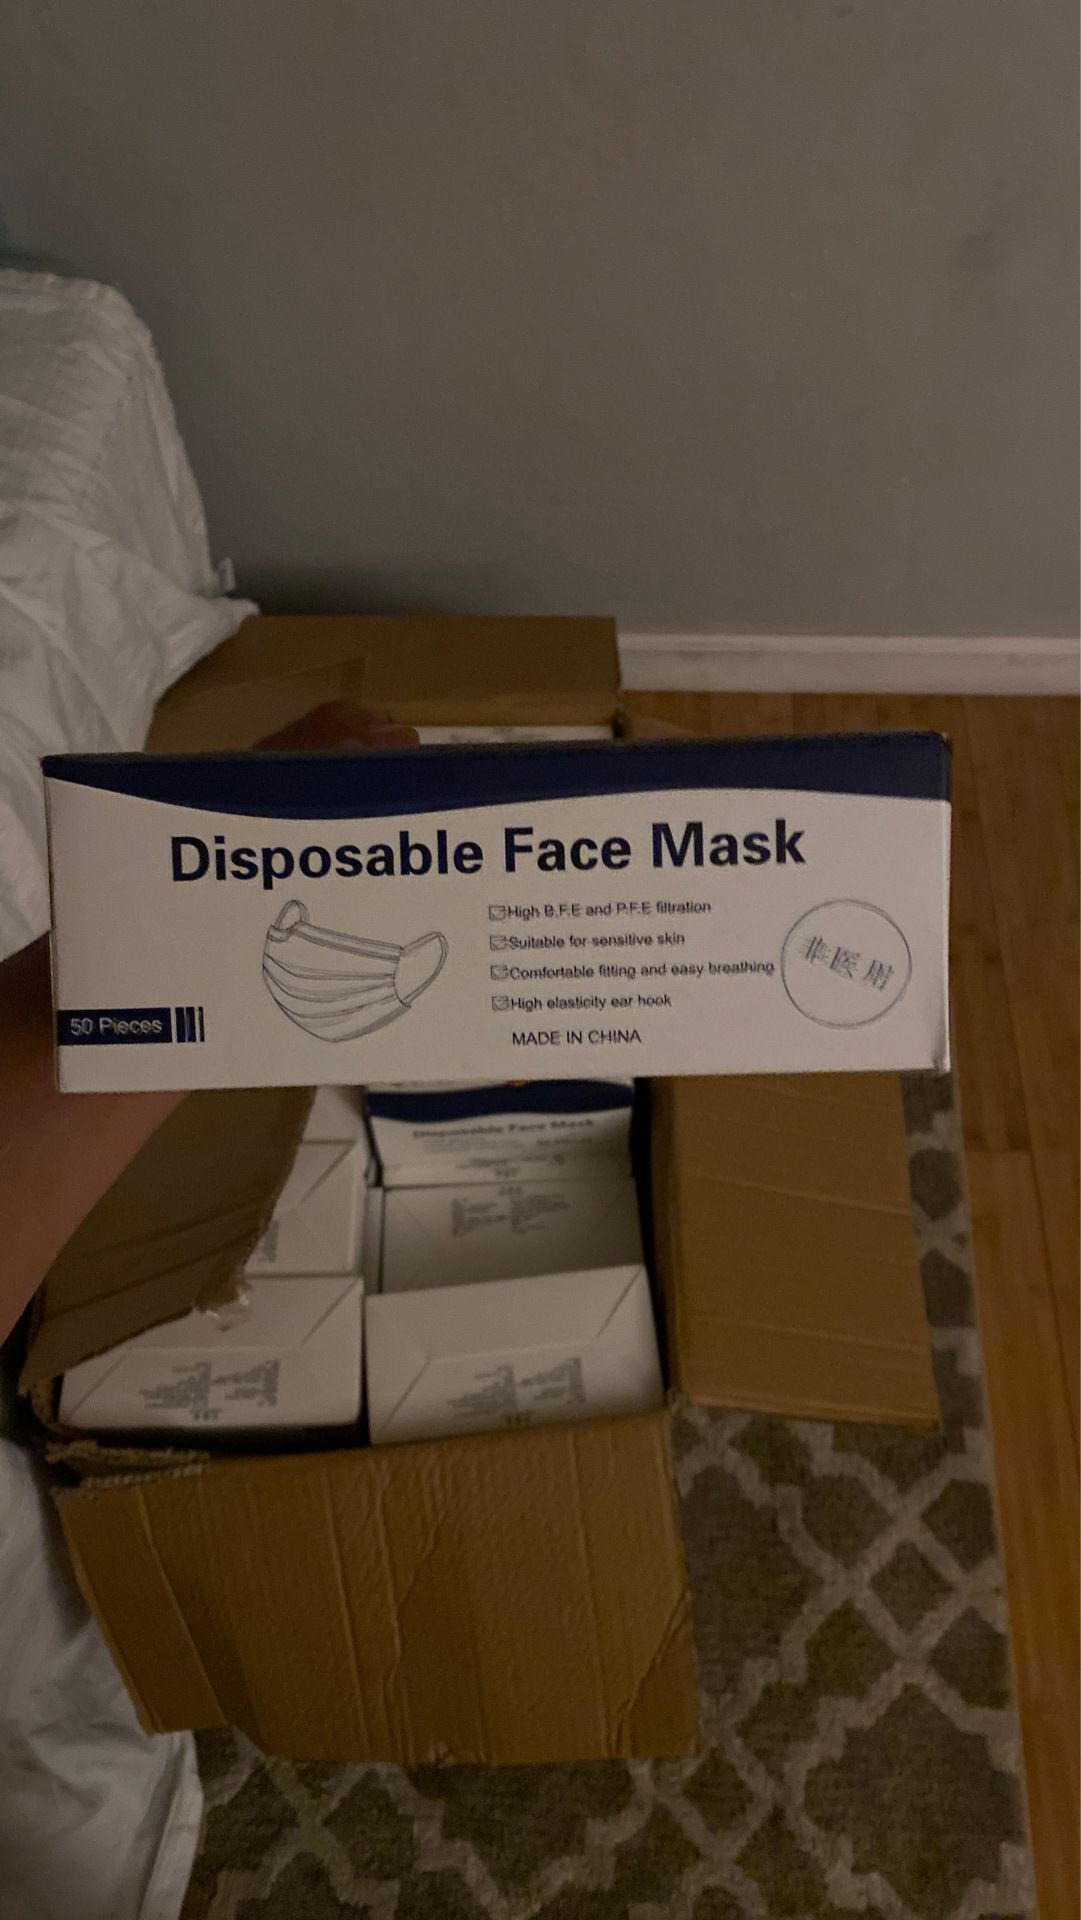 50 pieces-Disposable face mask